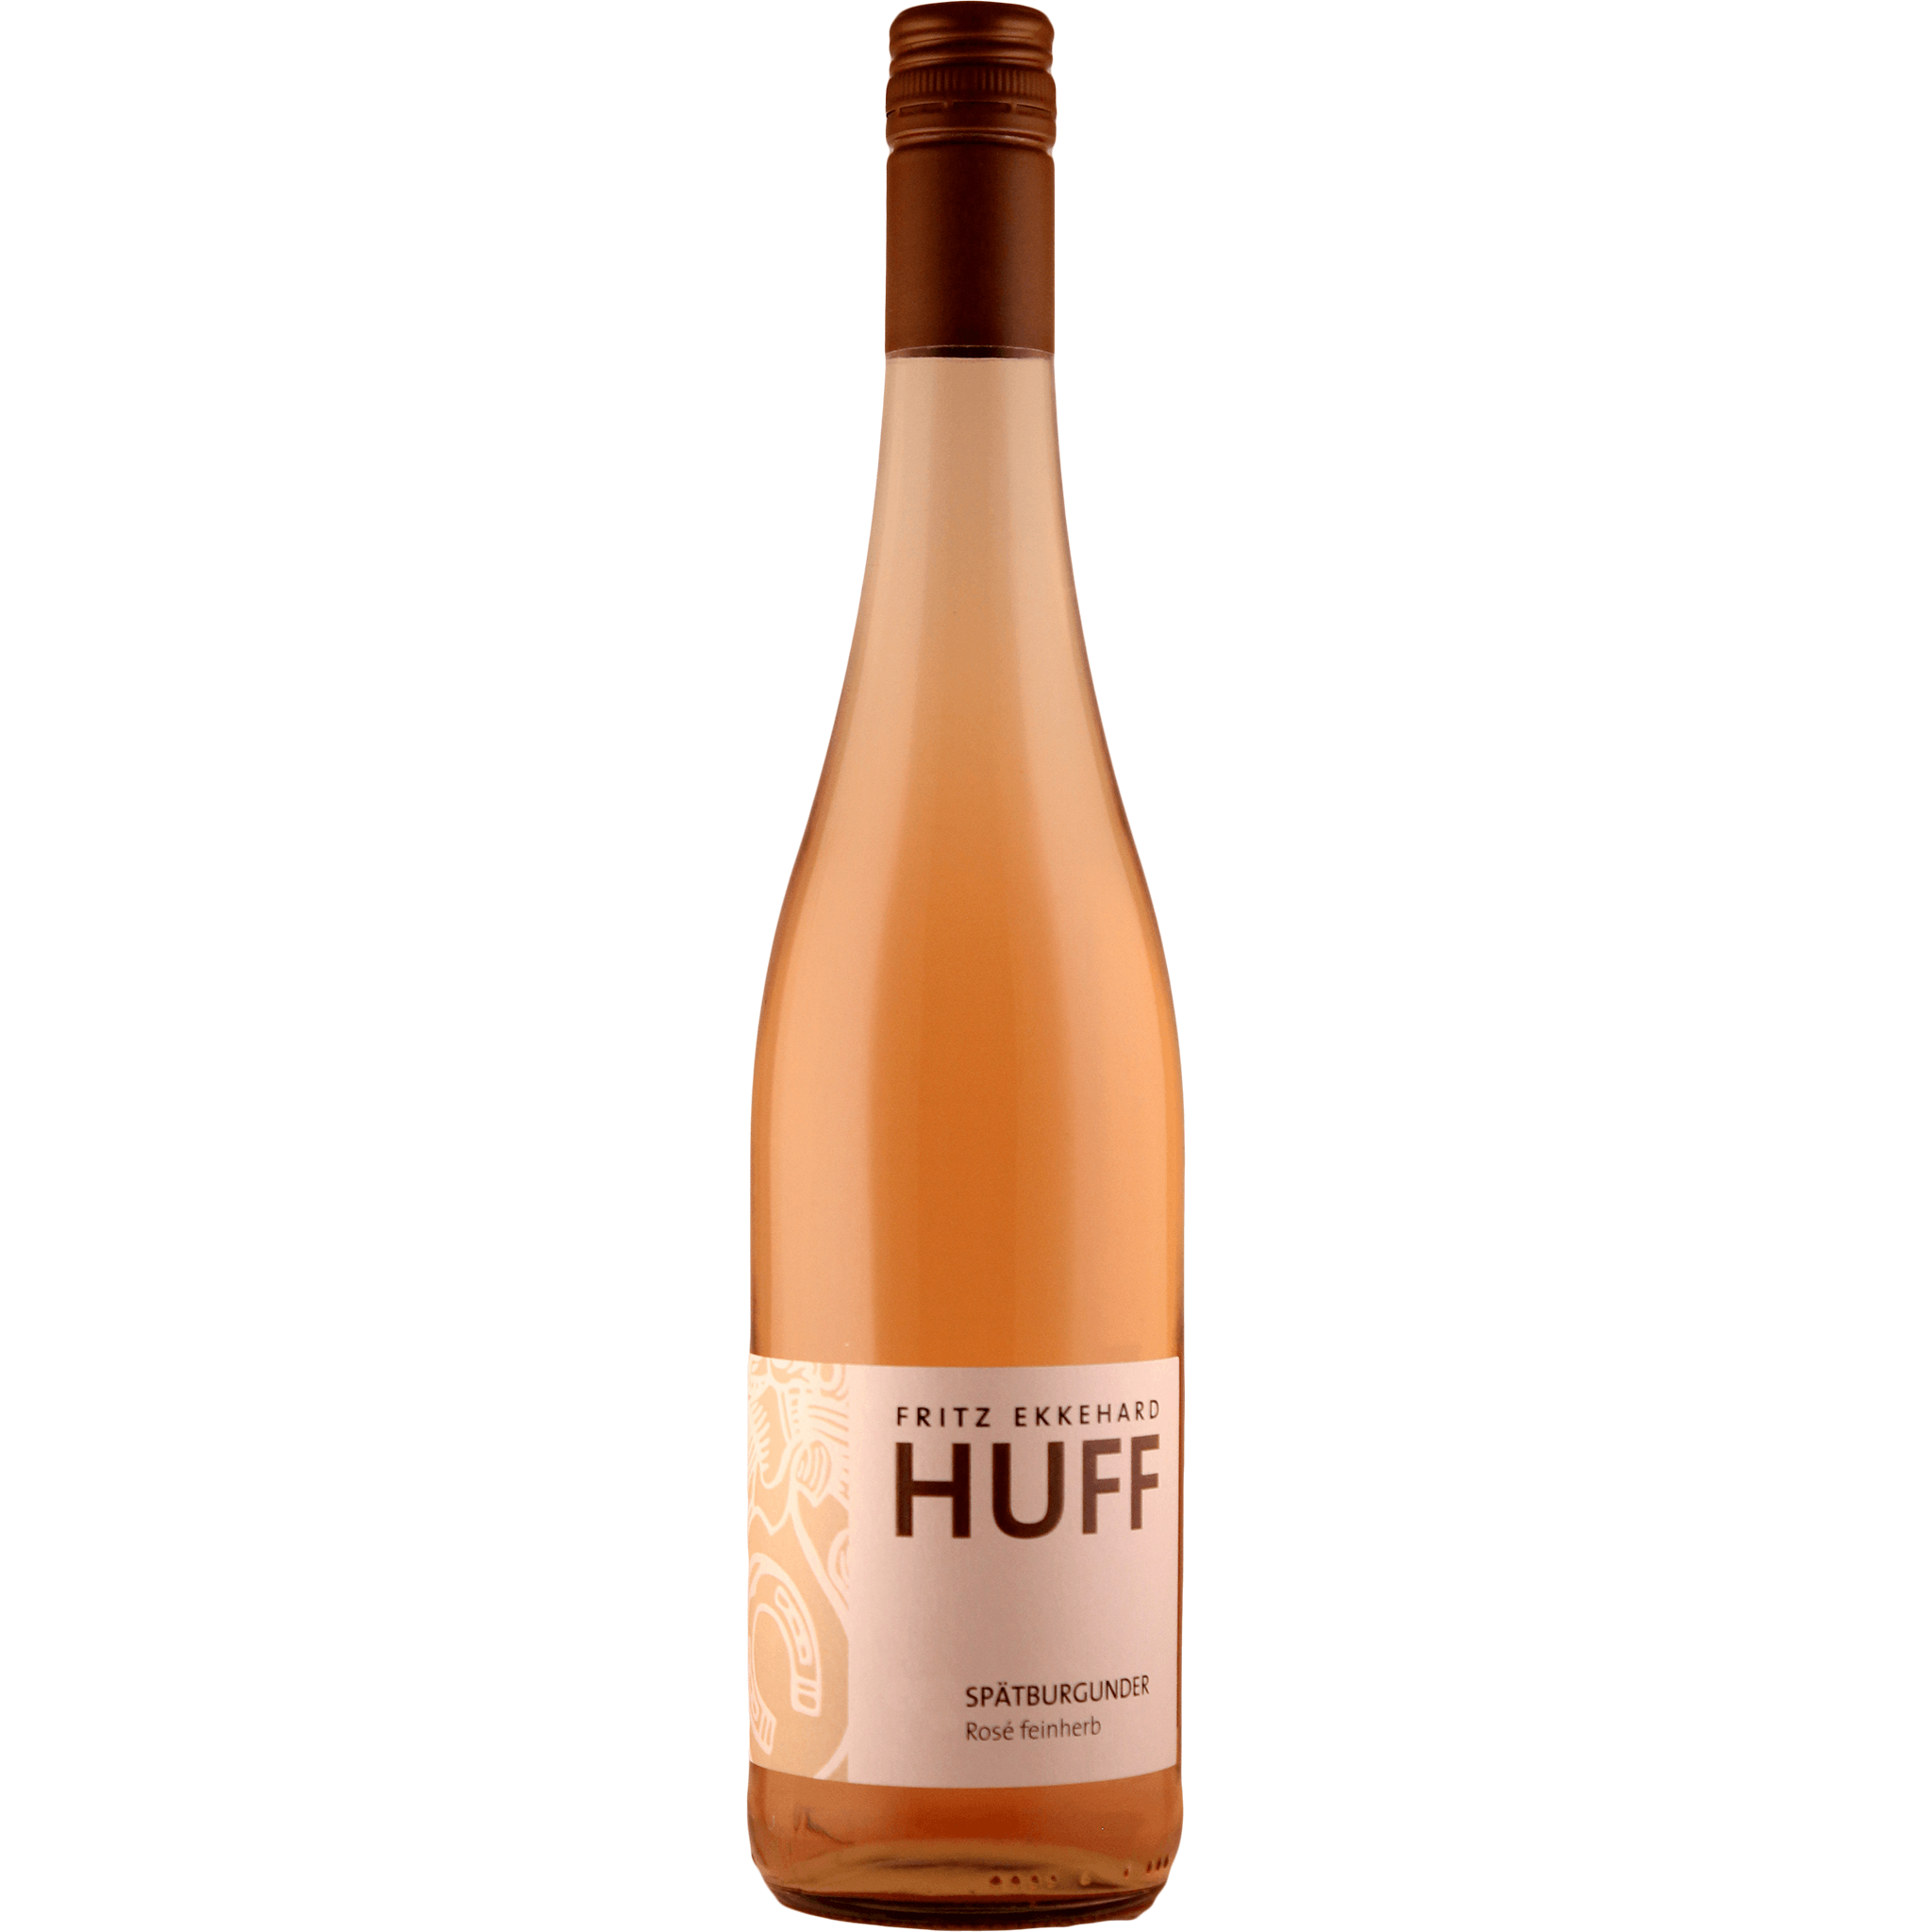 Verkaufsberater 2022 Spätburgunder Rosé feinherb – Weingut-Fritz-Ekkehard-Huff Nr.2222